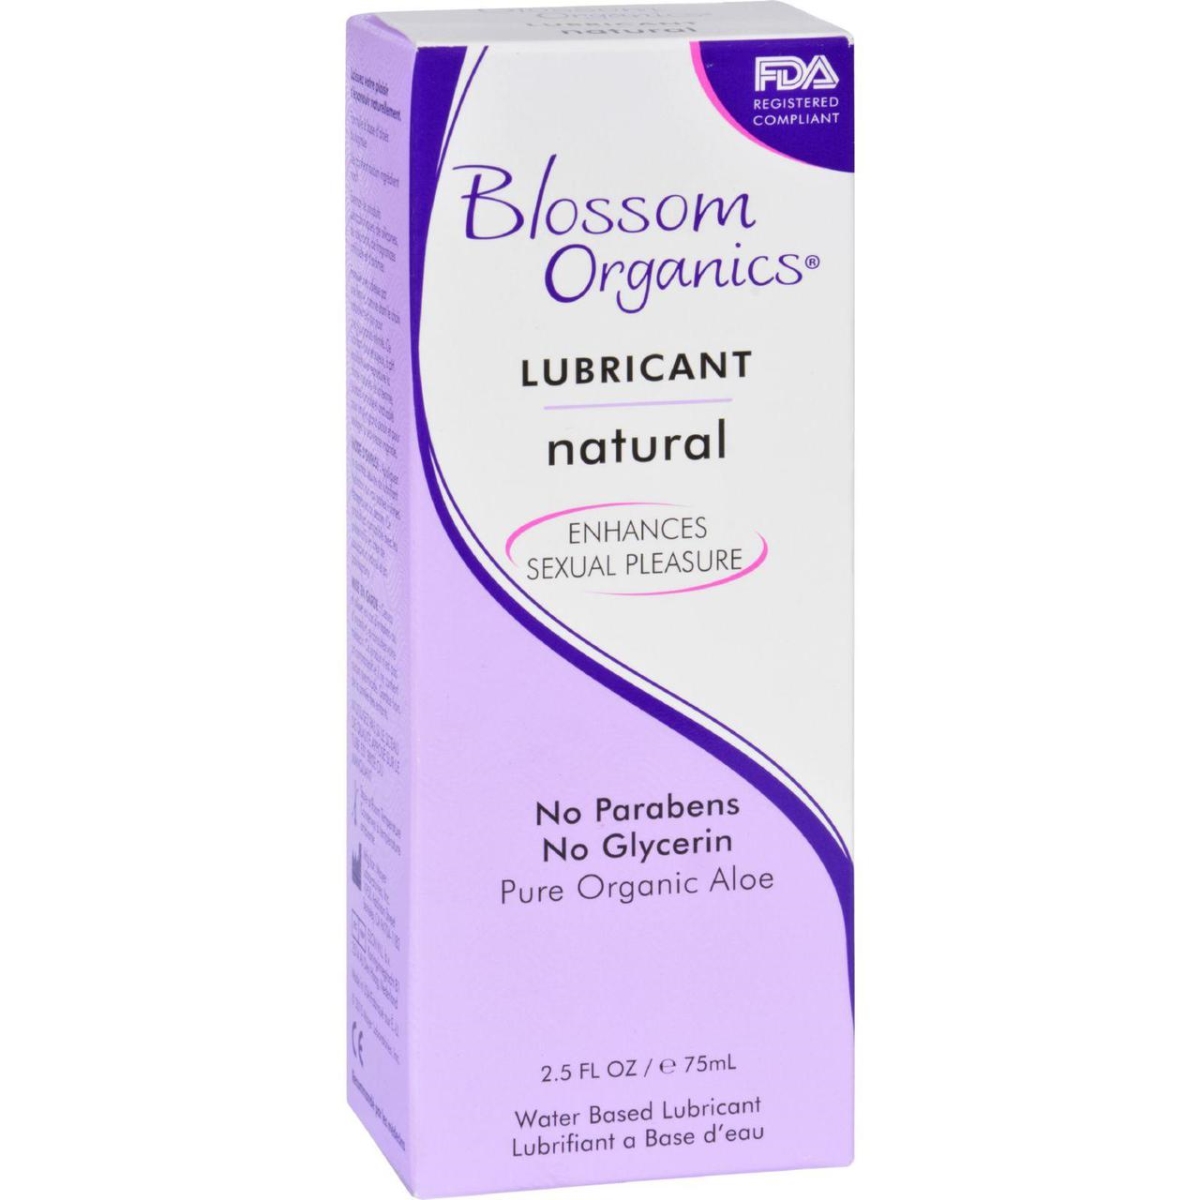 Picture of Blossom Organics HG1521749 2.5 fl oz Lubricant - Natural Moisturizing